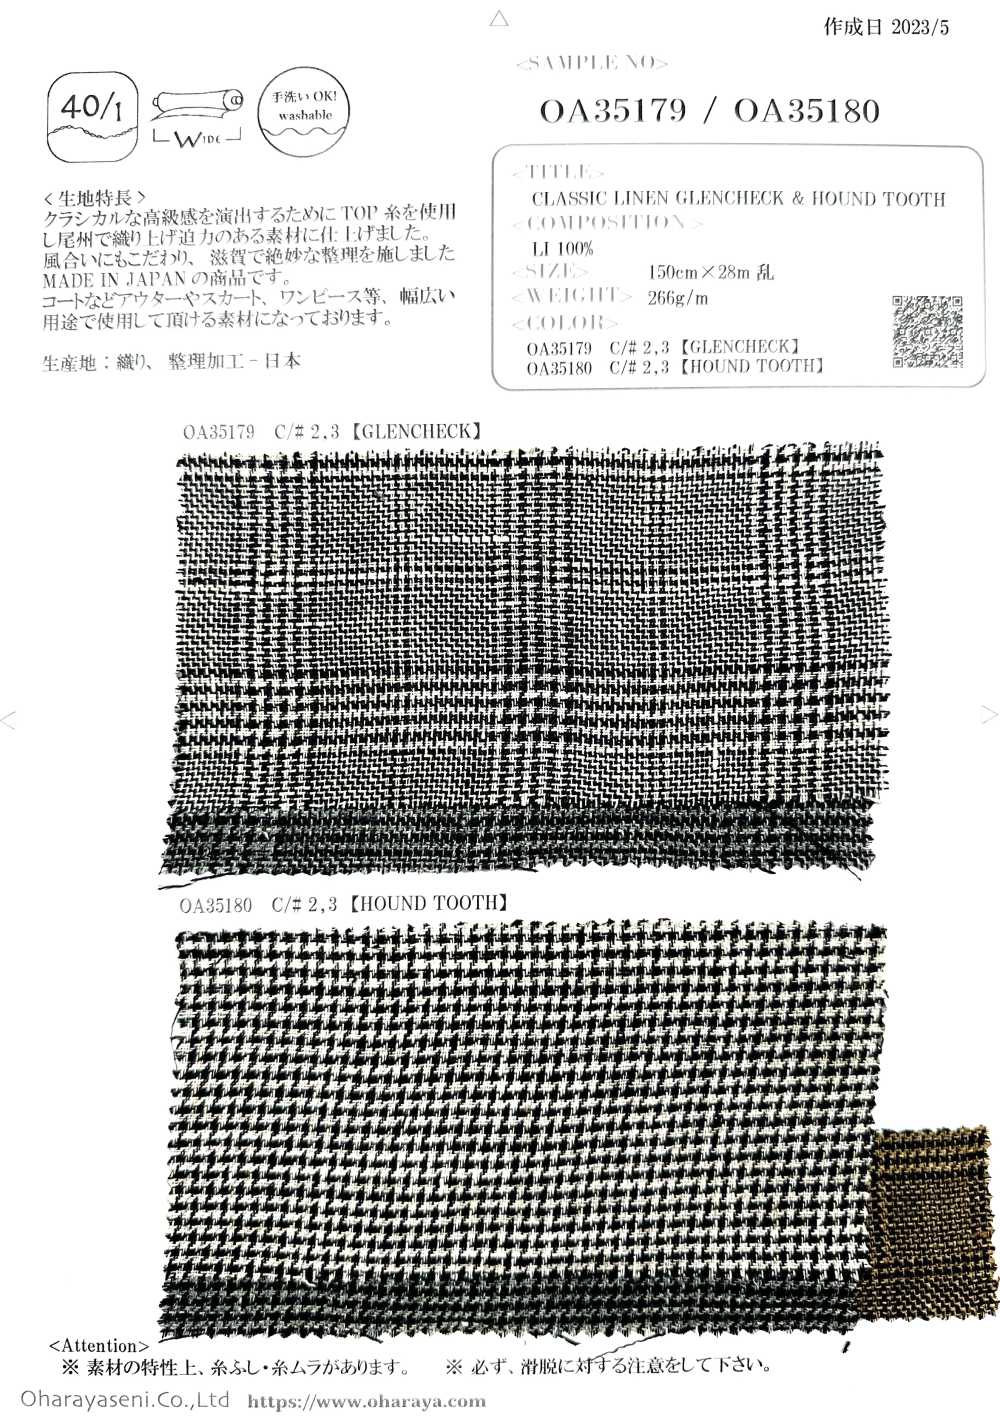 OA35180 CLASSIC LINEN GLENCHECK & HOUND TOOTH[Textile / Fabric] Oharayaseni